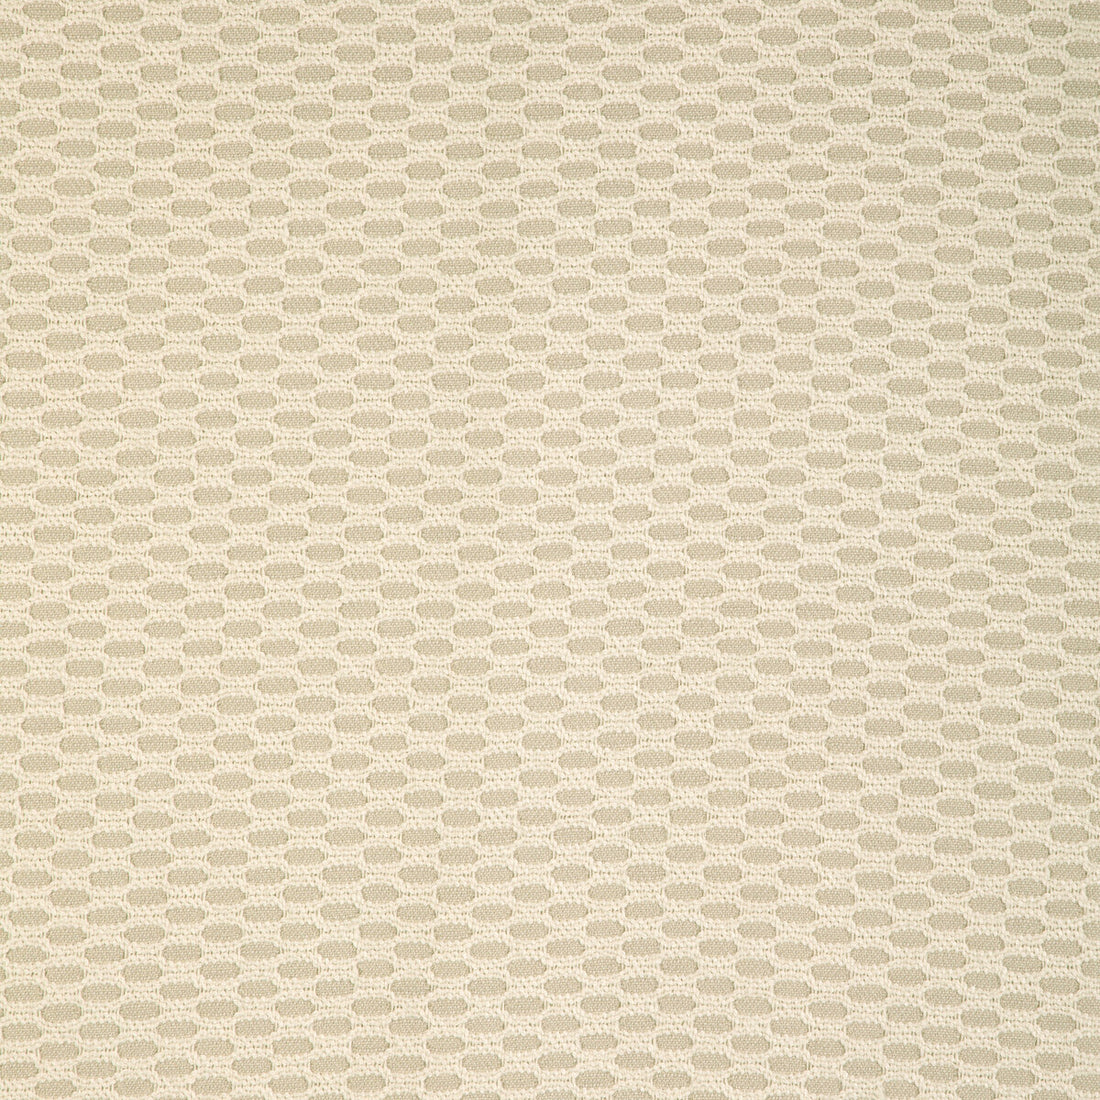 Kravet Smart fabric in 37005-116 color - pattern 37005.116.0 - by Kravet Smart in the Pavilion collection